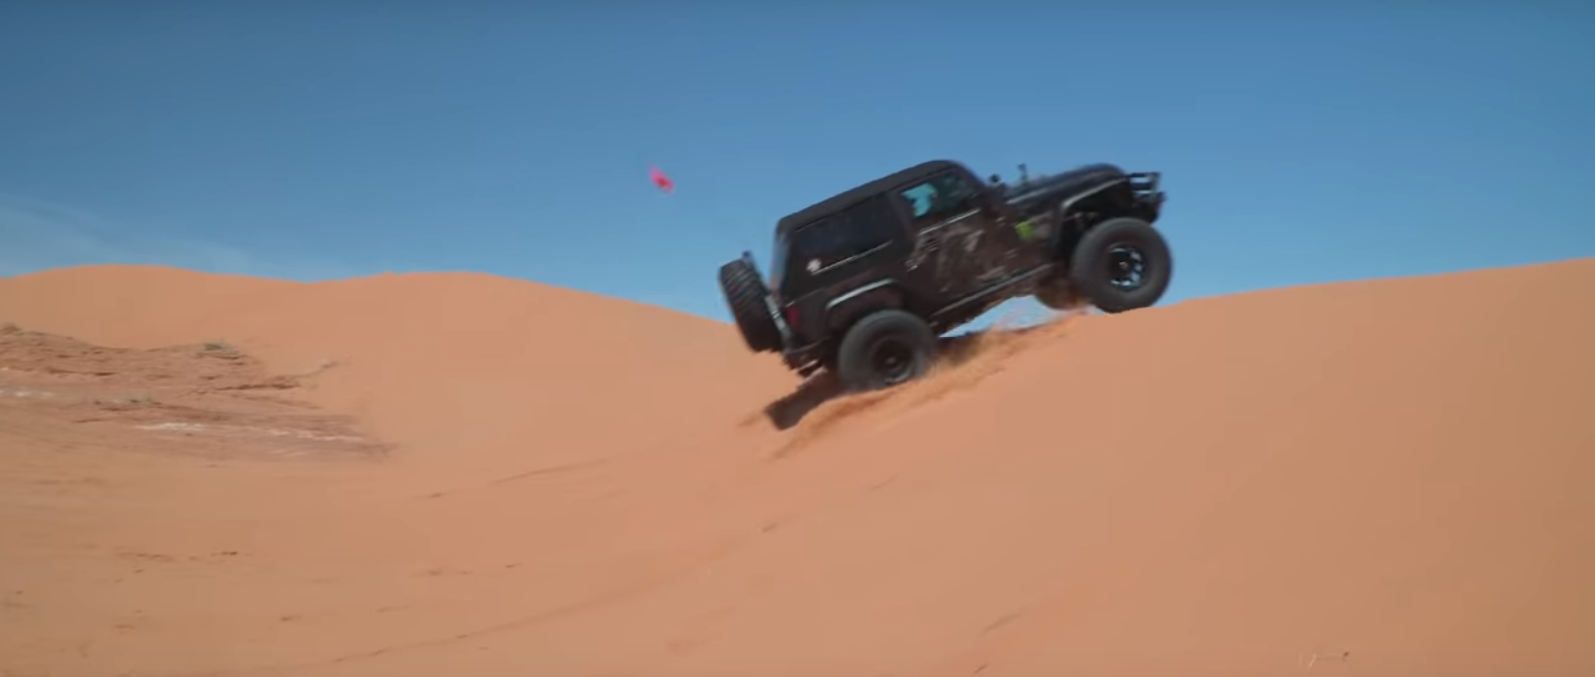 jk-forum.com How to Drive a Jeep Wrangler on Sand